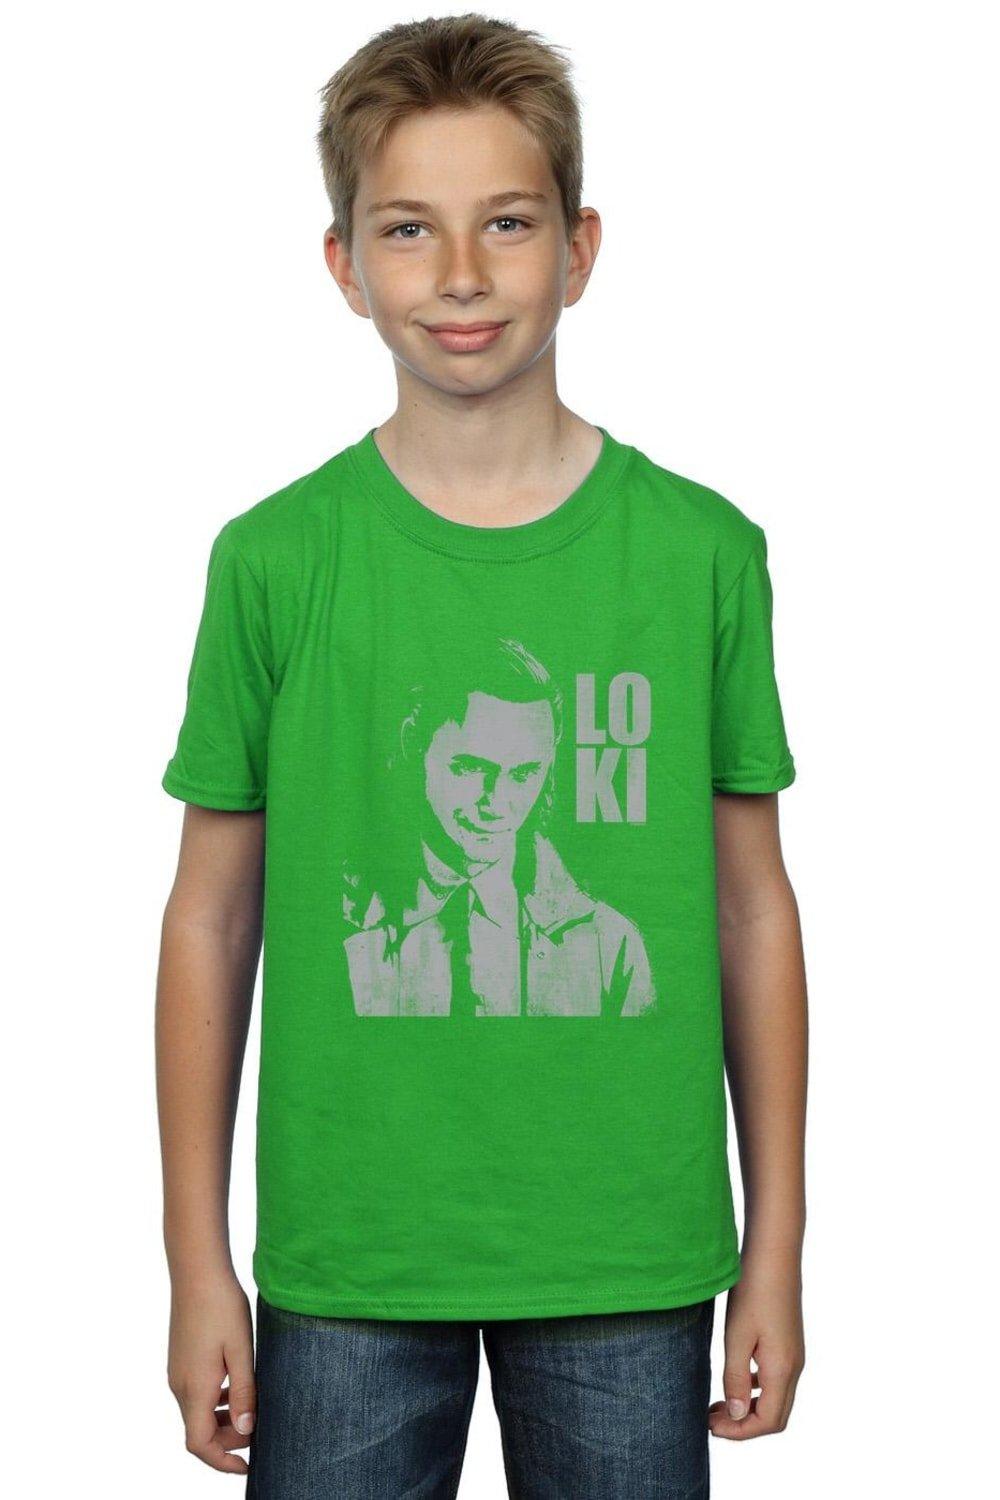 мужская футболка локи marvel s зеленый Футболка с плакатом «Голова Локи» Marvel, зеленый